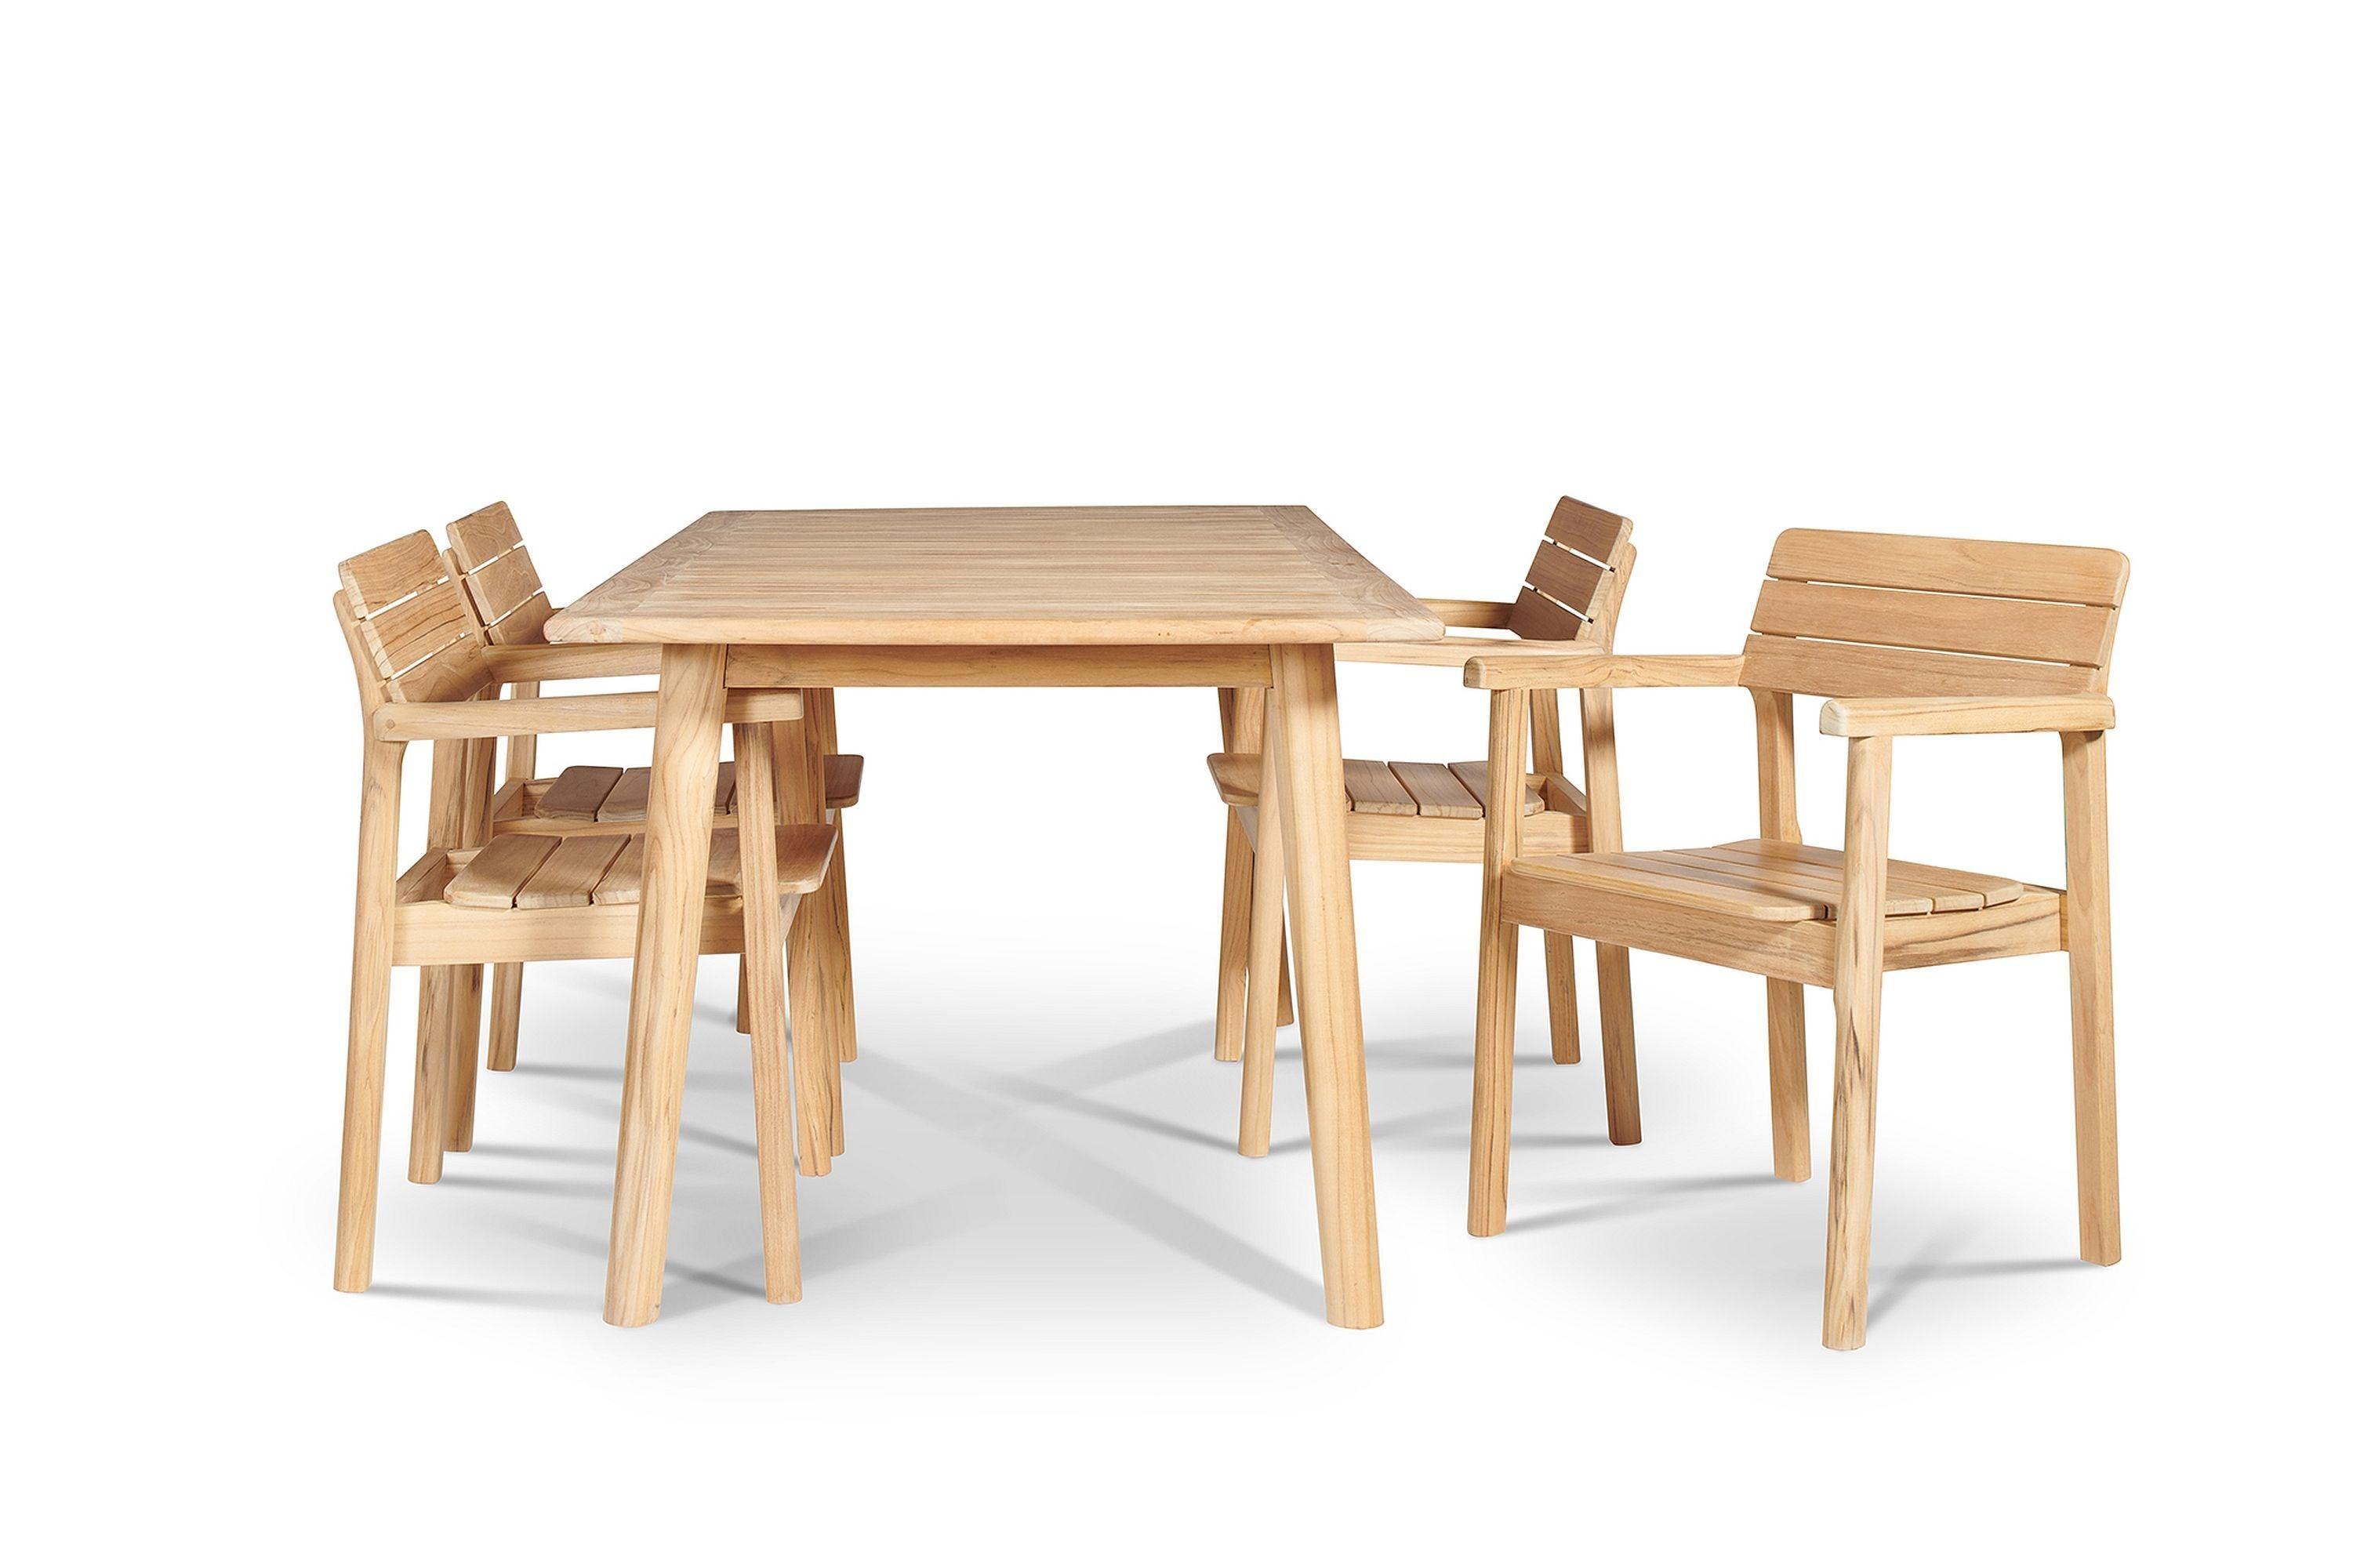 LOOMLAN Outdoor - Modurn Rectangular Teak Outdoor Dining Table - Outdoor Dining Tables